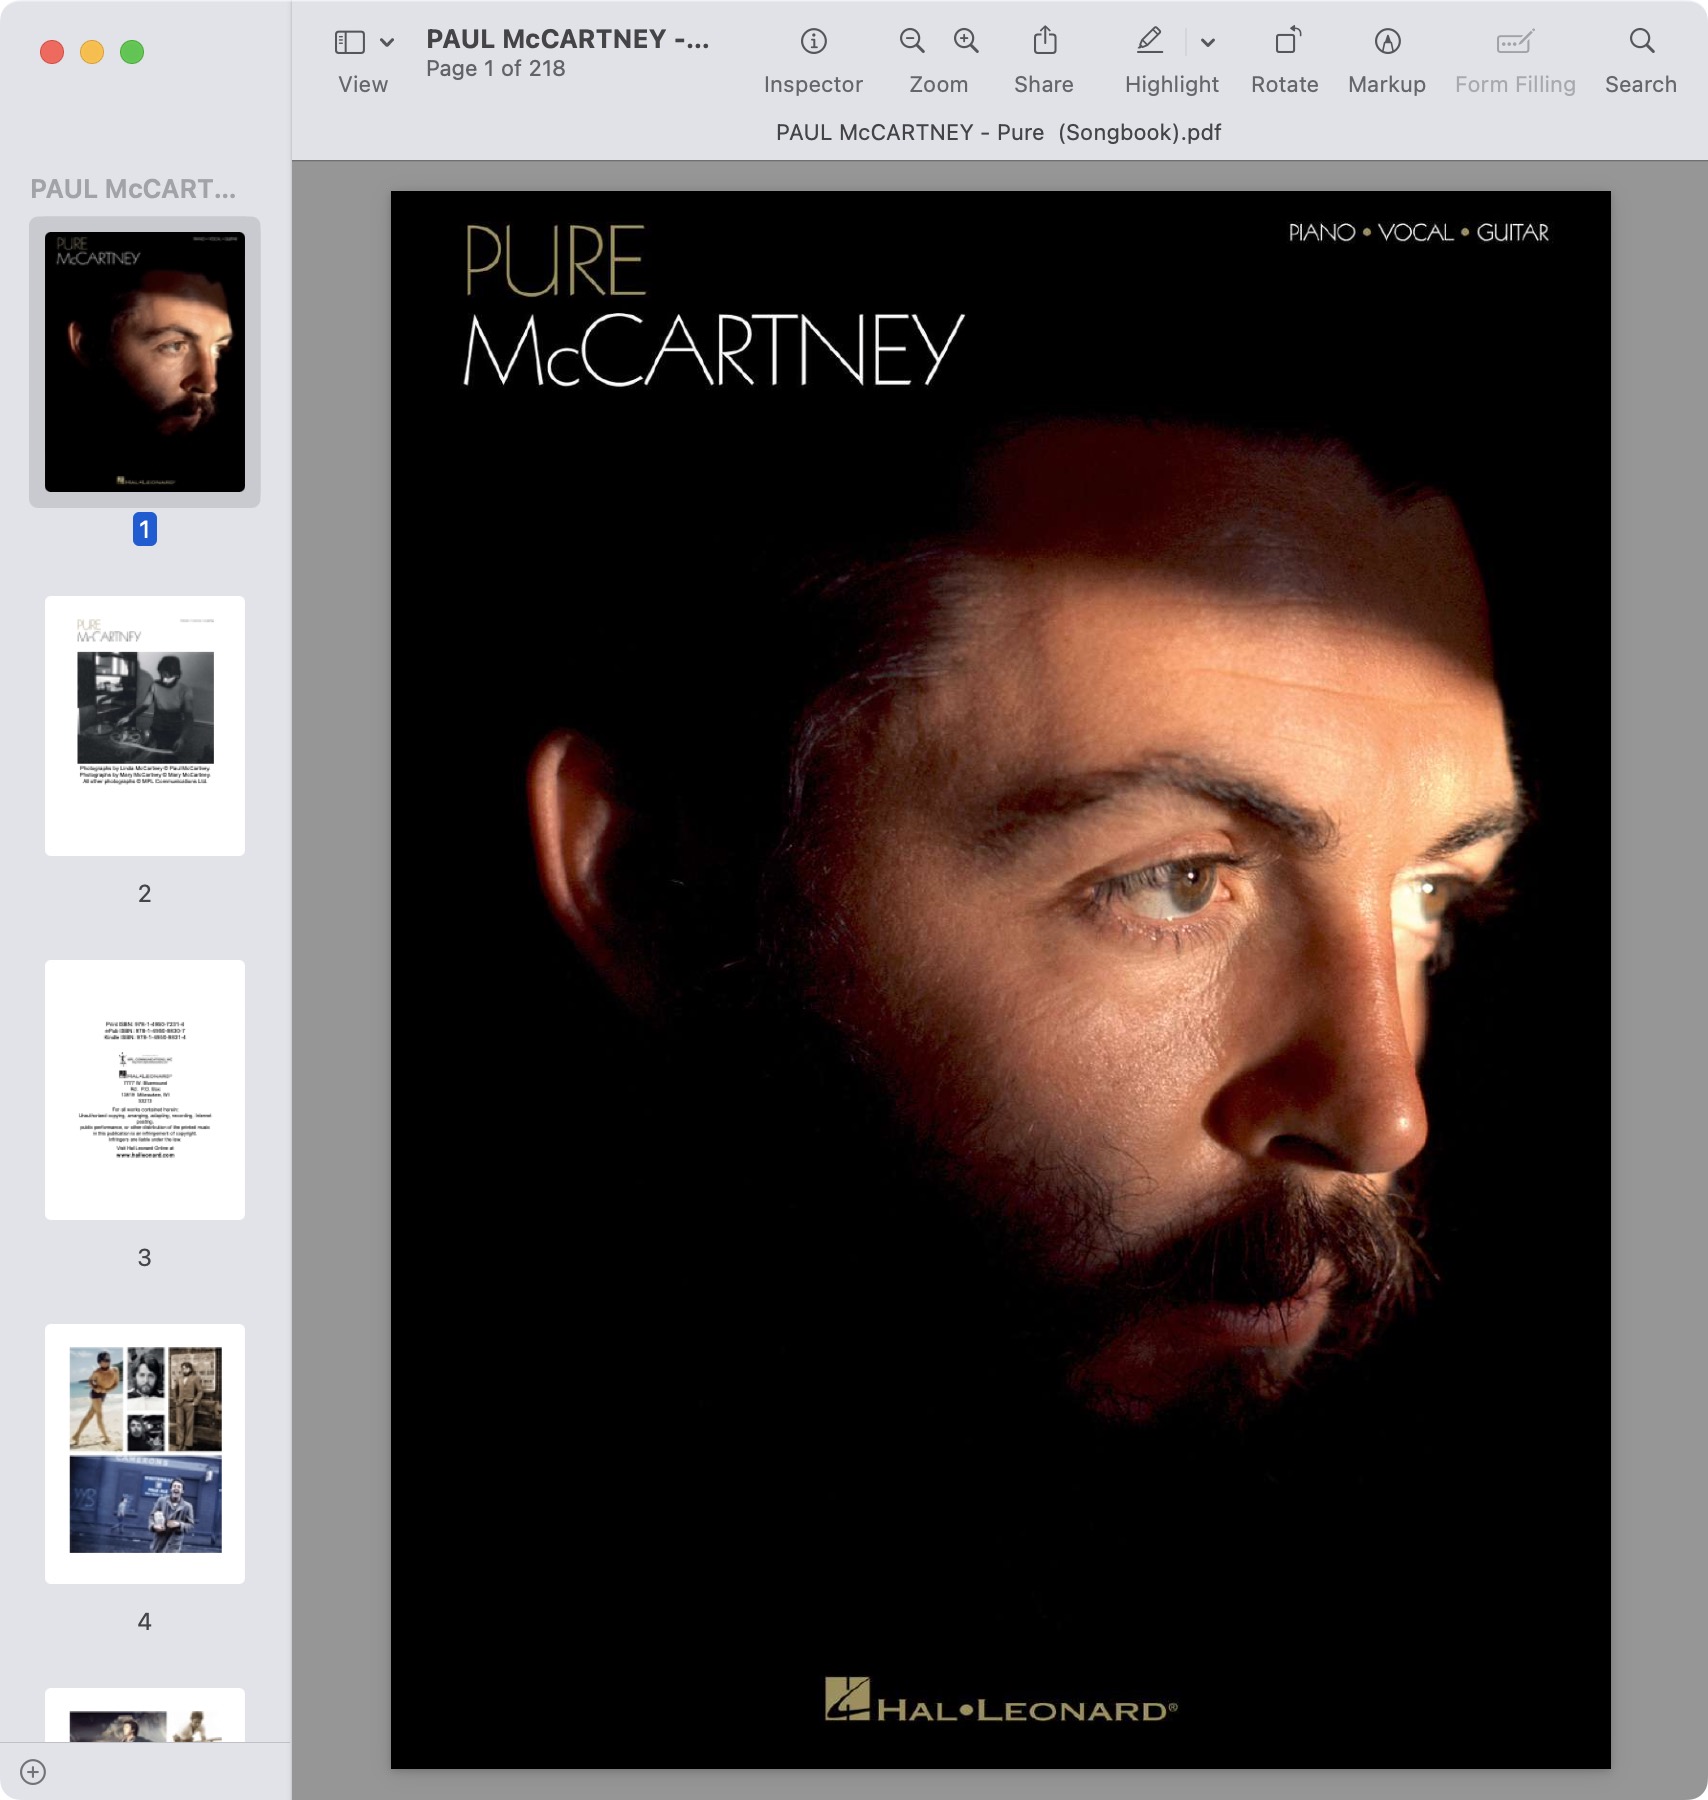 PAUL McCARTNEY - Pure  (Songbook).jpg